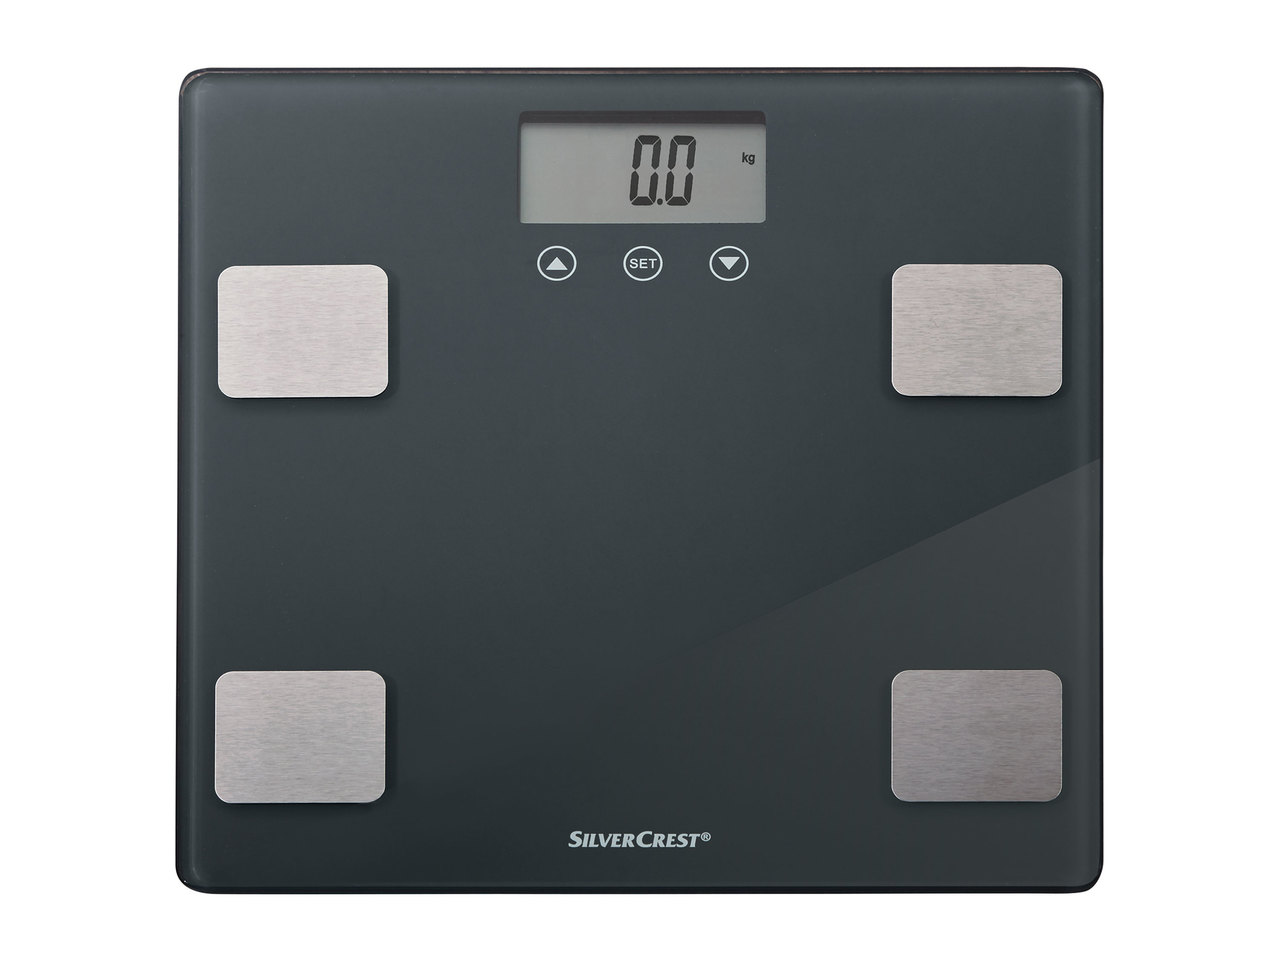 Silvercrest Body Analyser Scale1